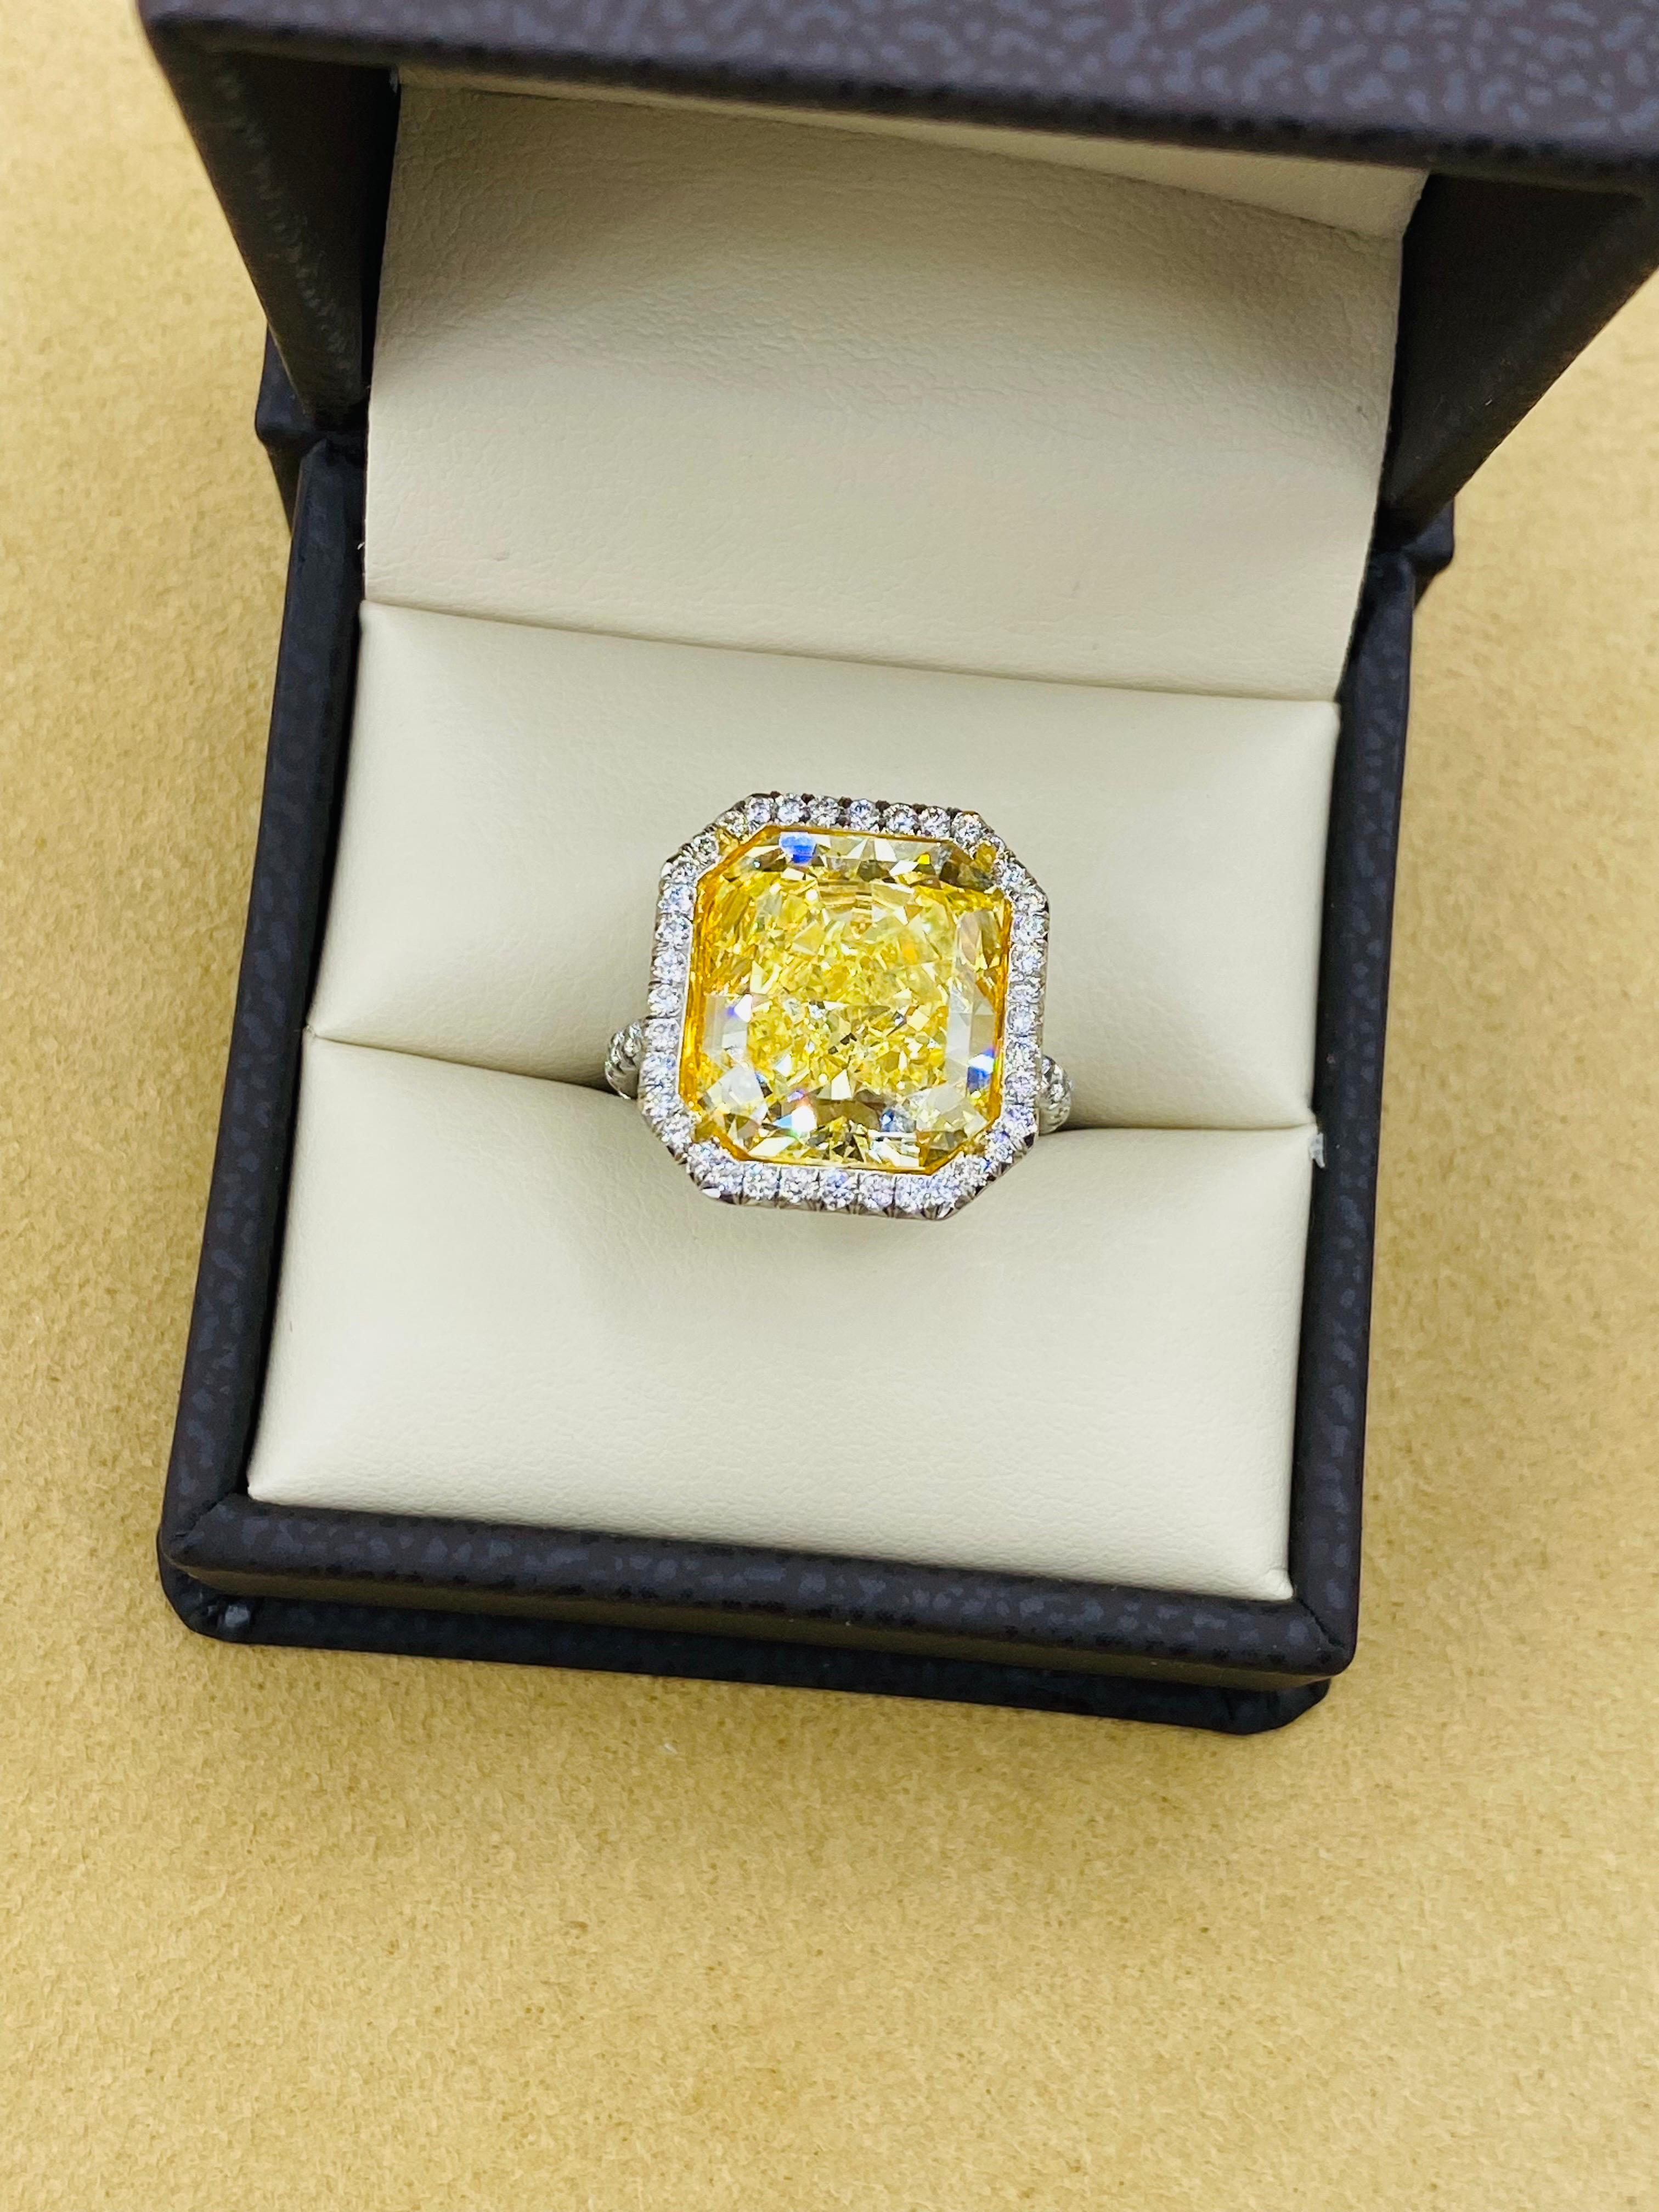 Radiant Cut Emilio Jewelry Gia Certified 10.00 Carat Fancy Intense Yellow Diamond Ring For Sale